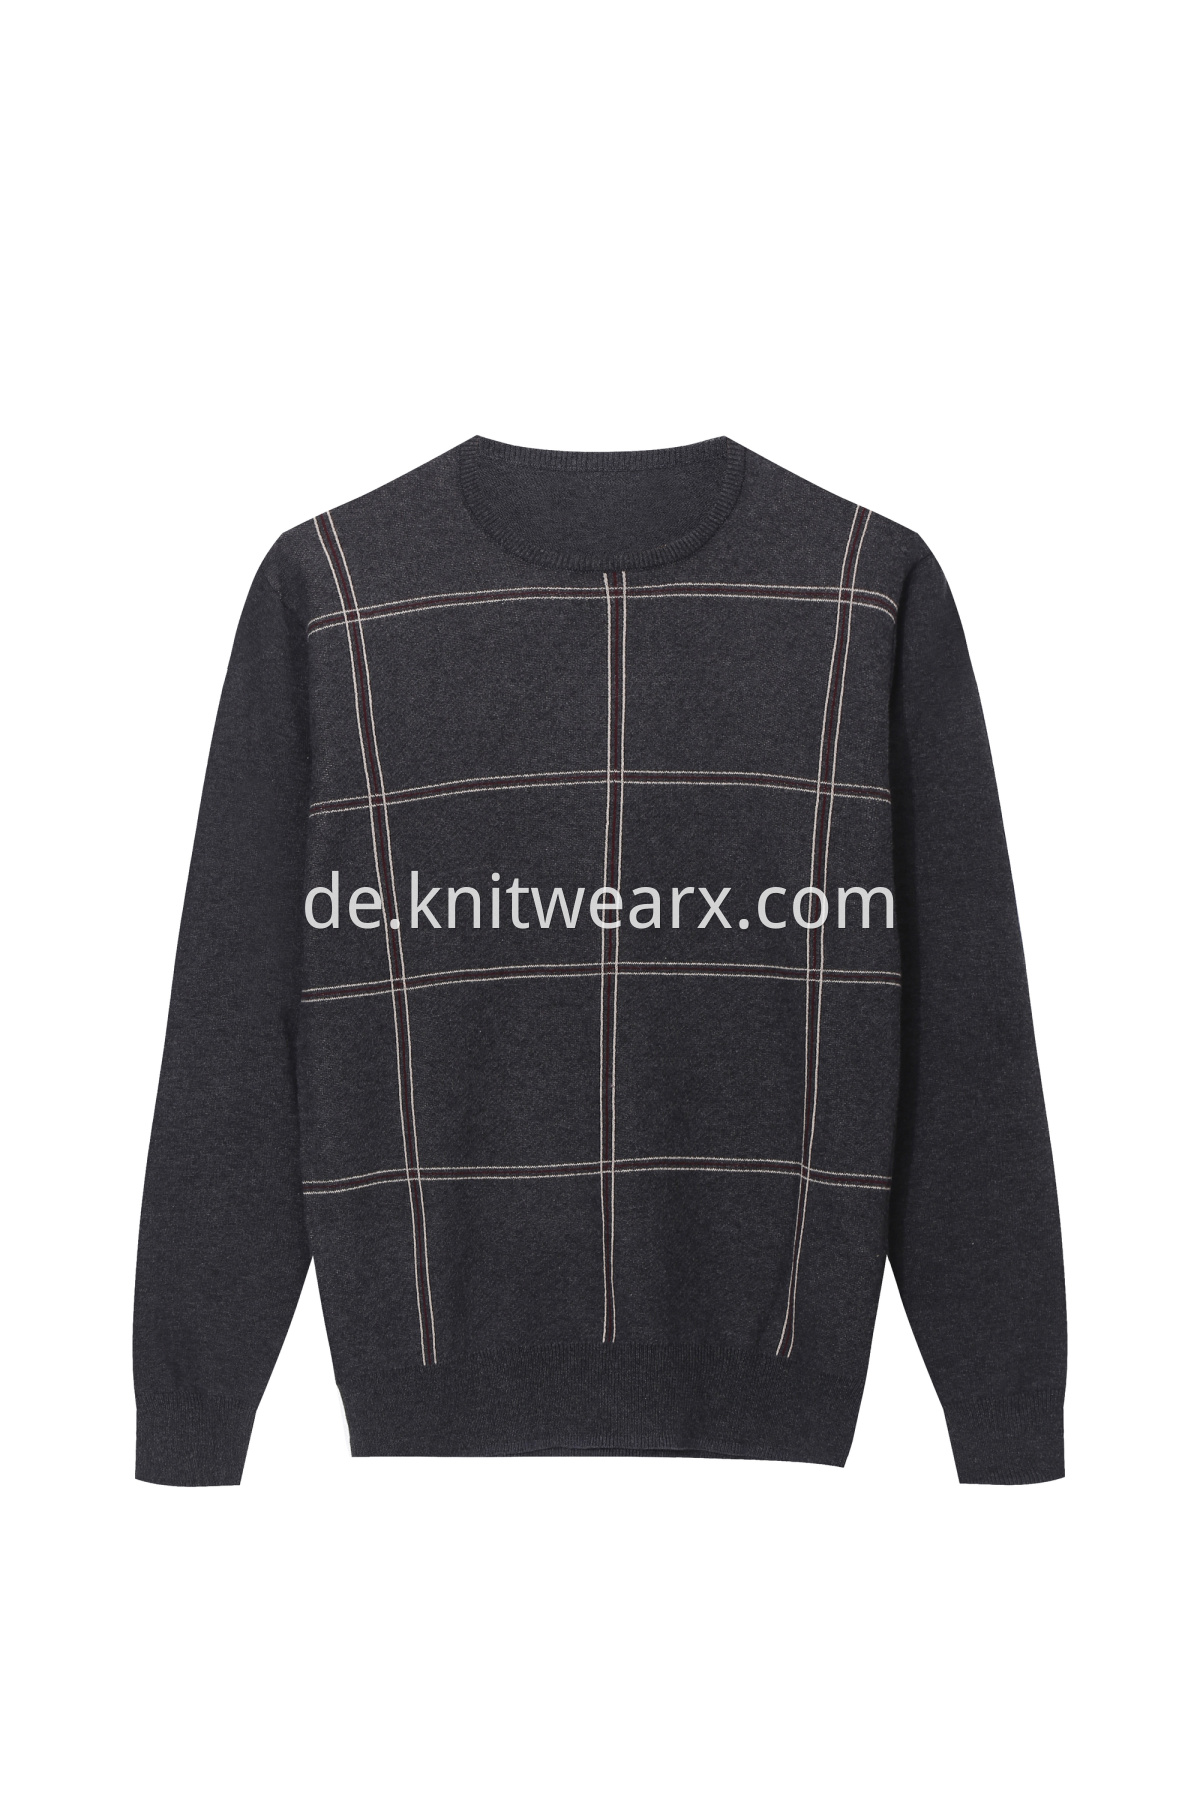 Men's Jacquard Plaid Knit Crew neck Sweater